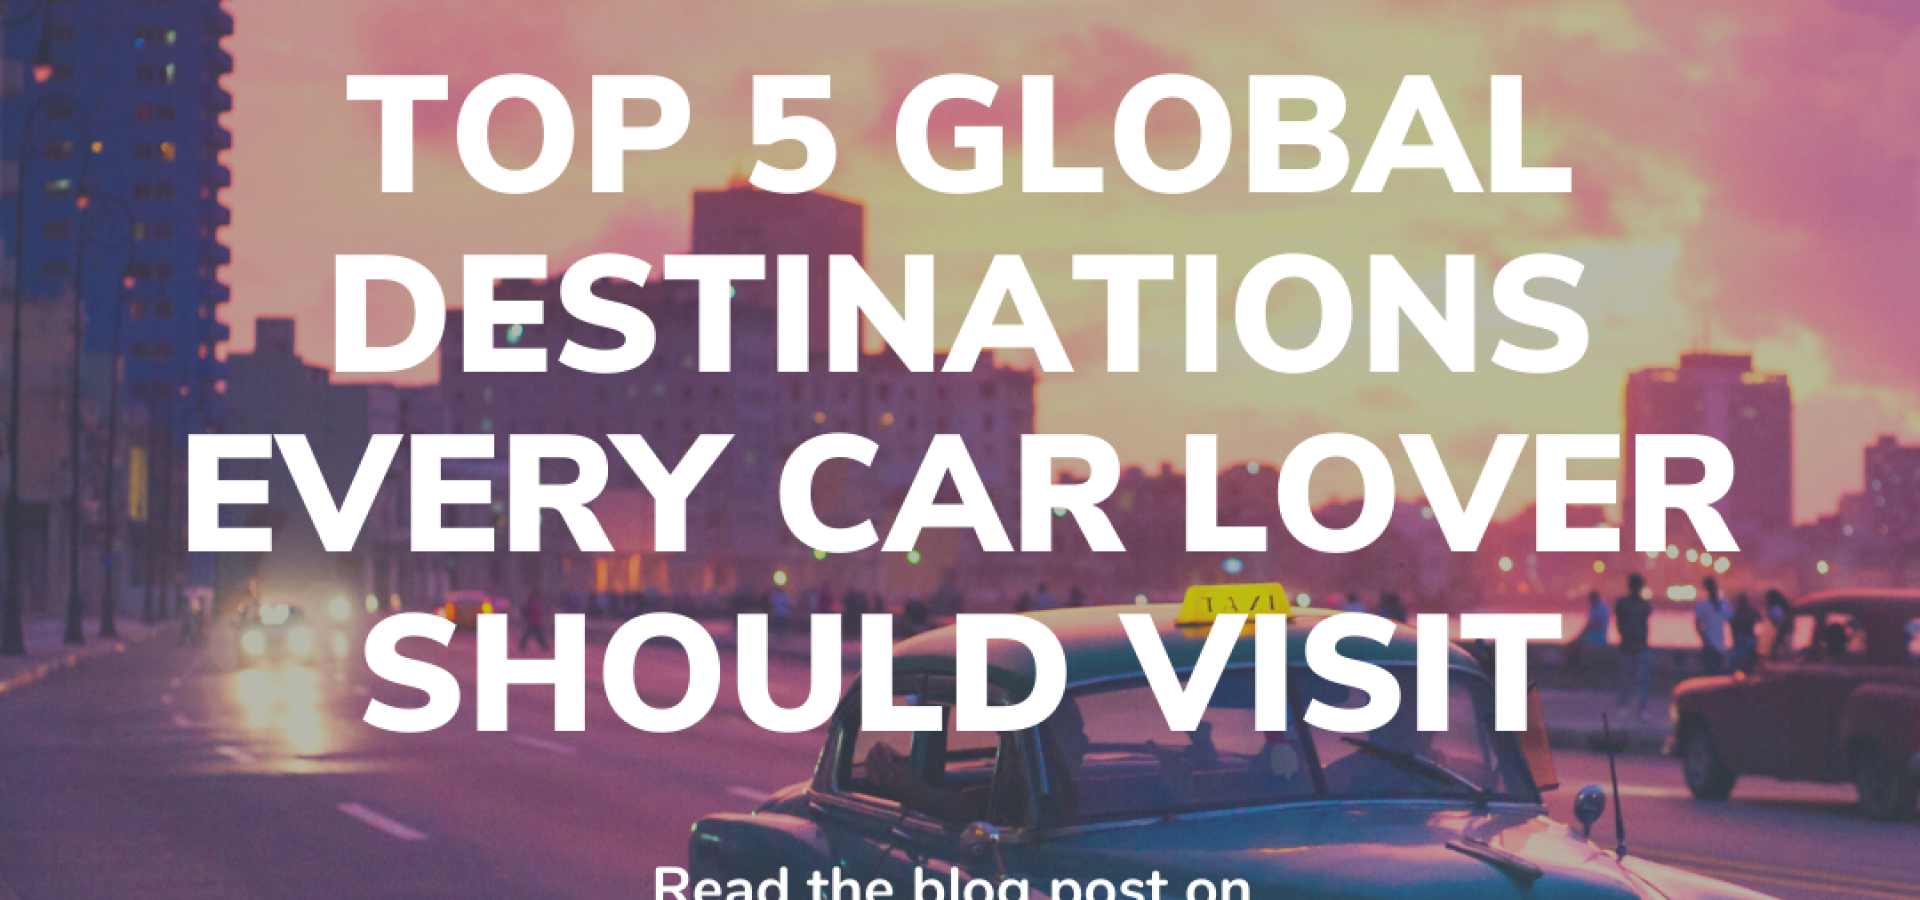 Top 5 Global Race Destinations